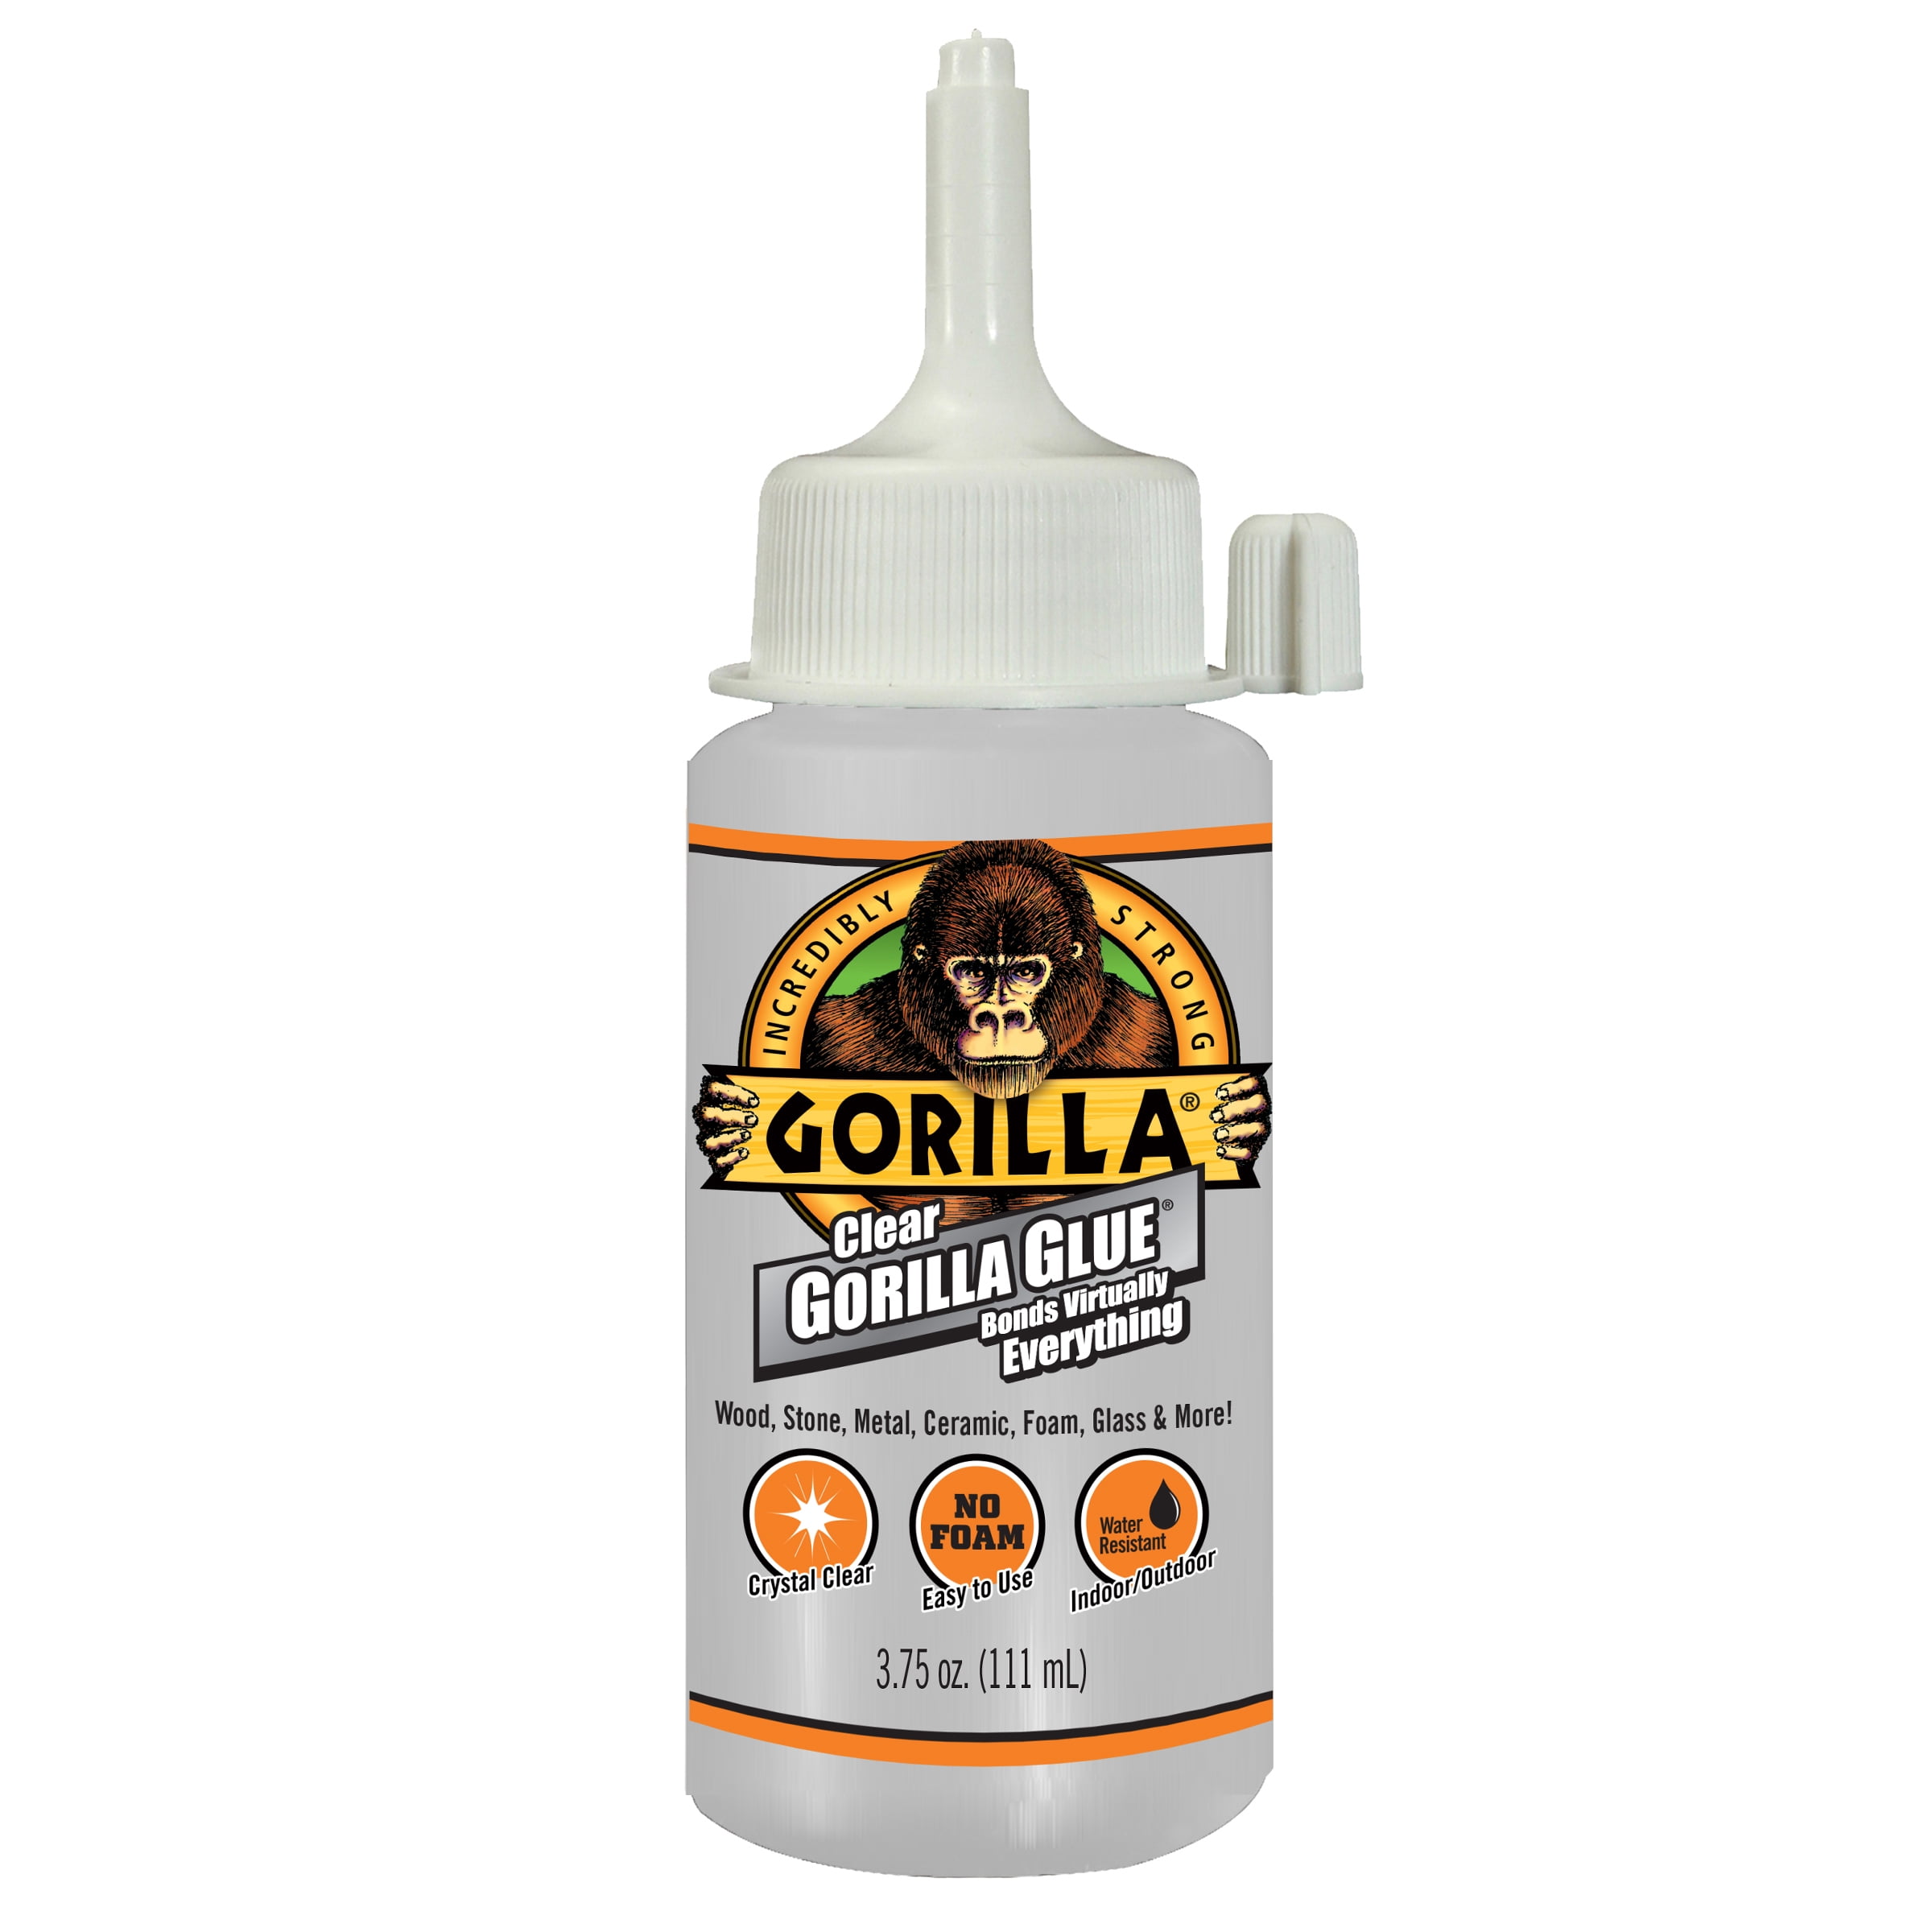 Gorilla Clear Glue 3.75 ounce Bottle, Pack of 1 Bottle